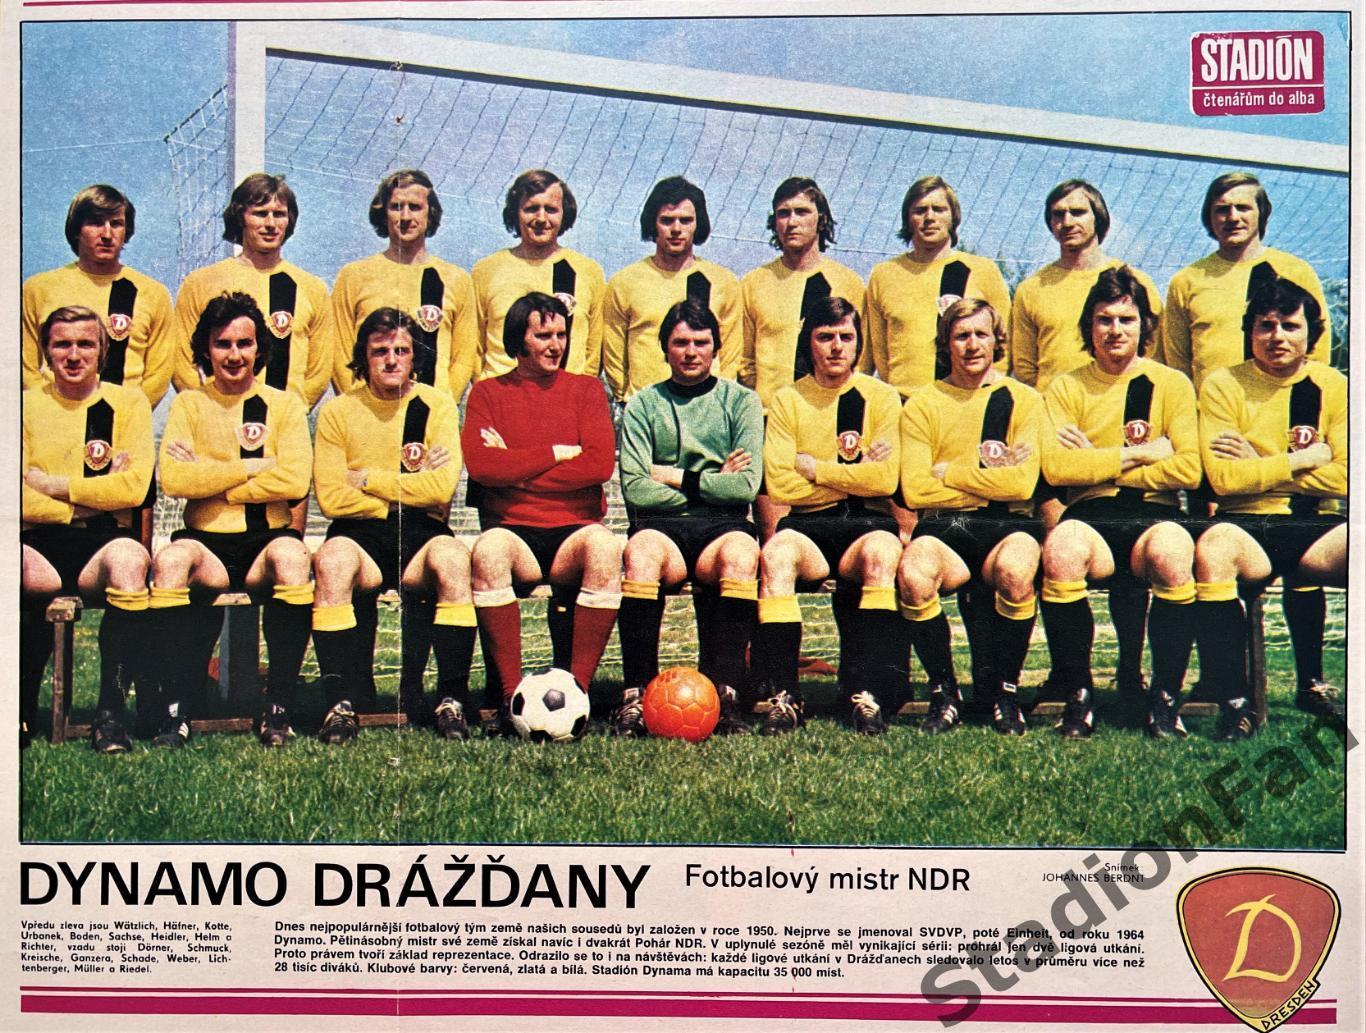 Постер из журнала Стадион (Stadion) - Dynamo Dresden, 1976.